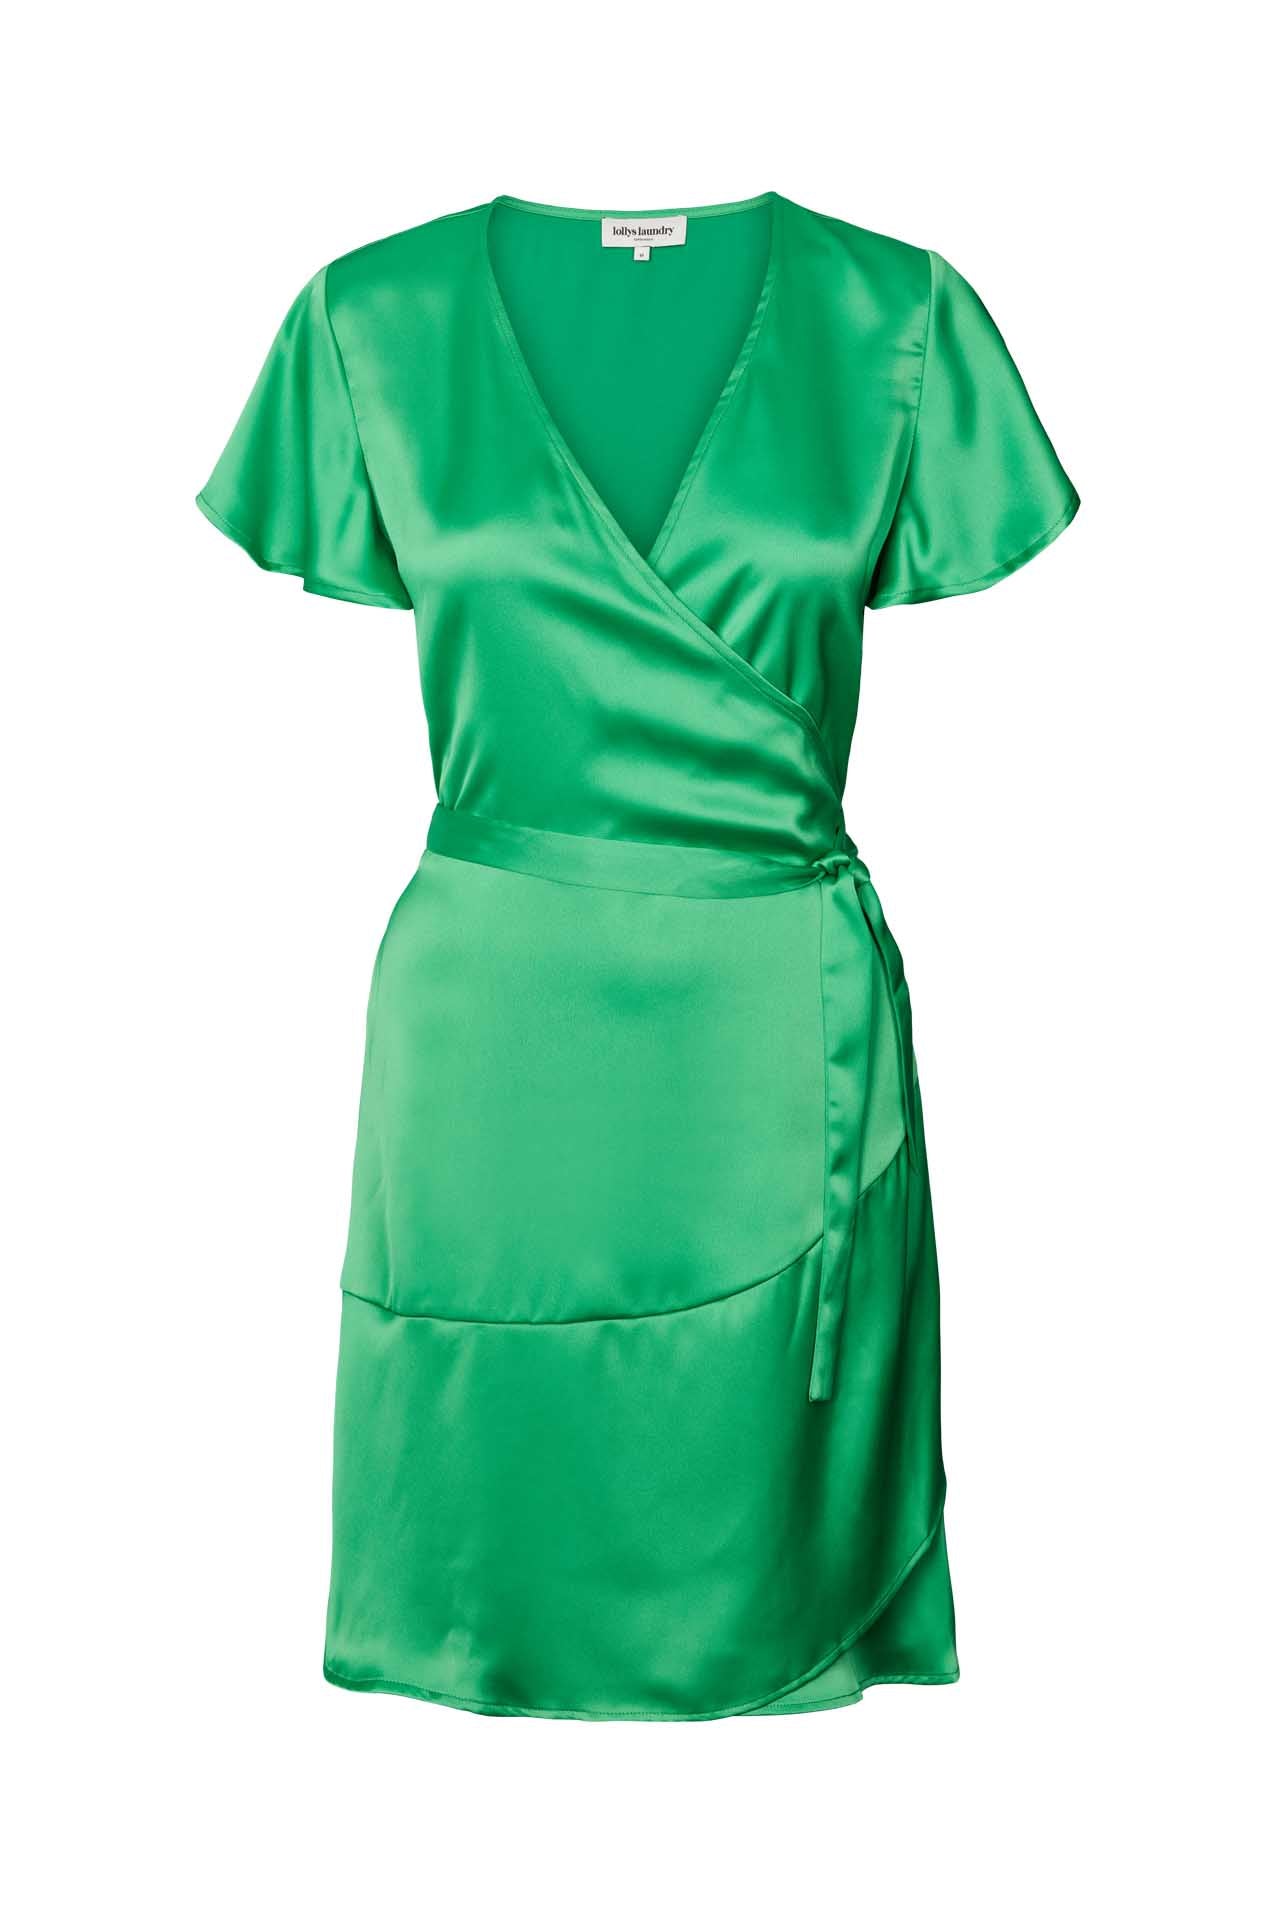 Lollys Laundry Miranda Wrap around dress Dress 40 Green